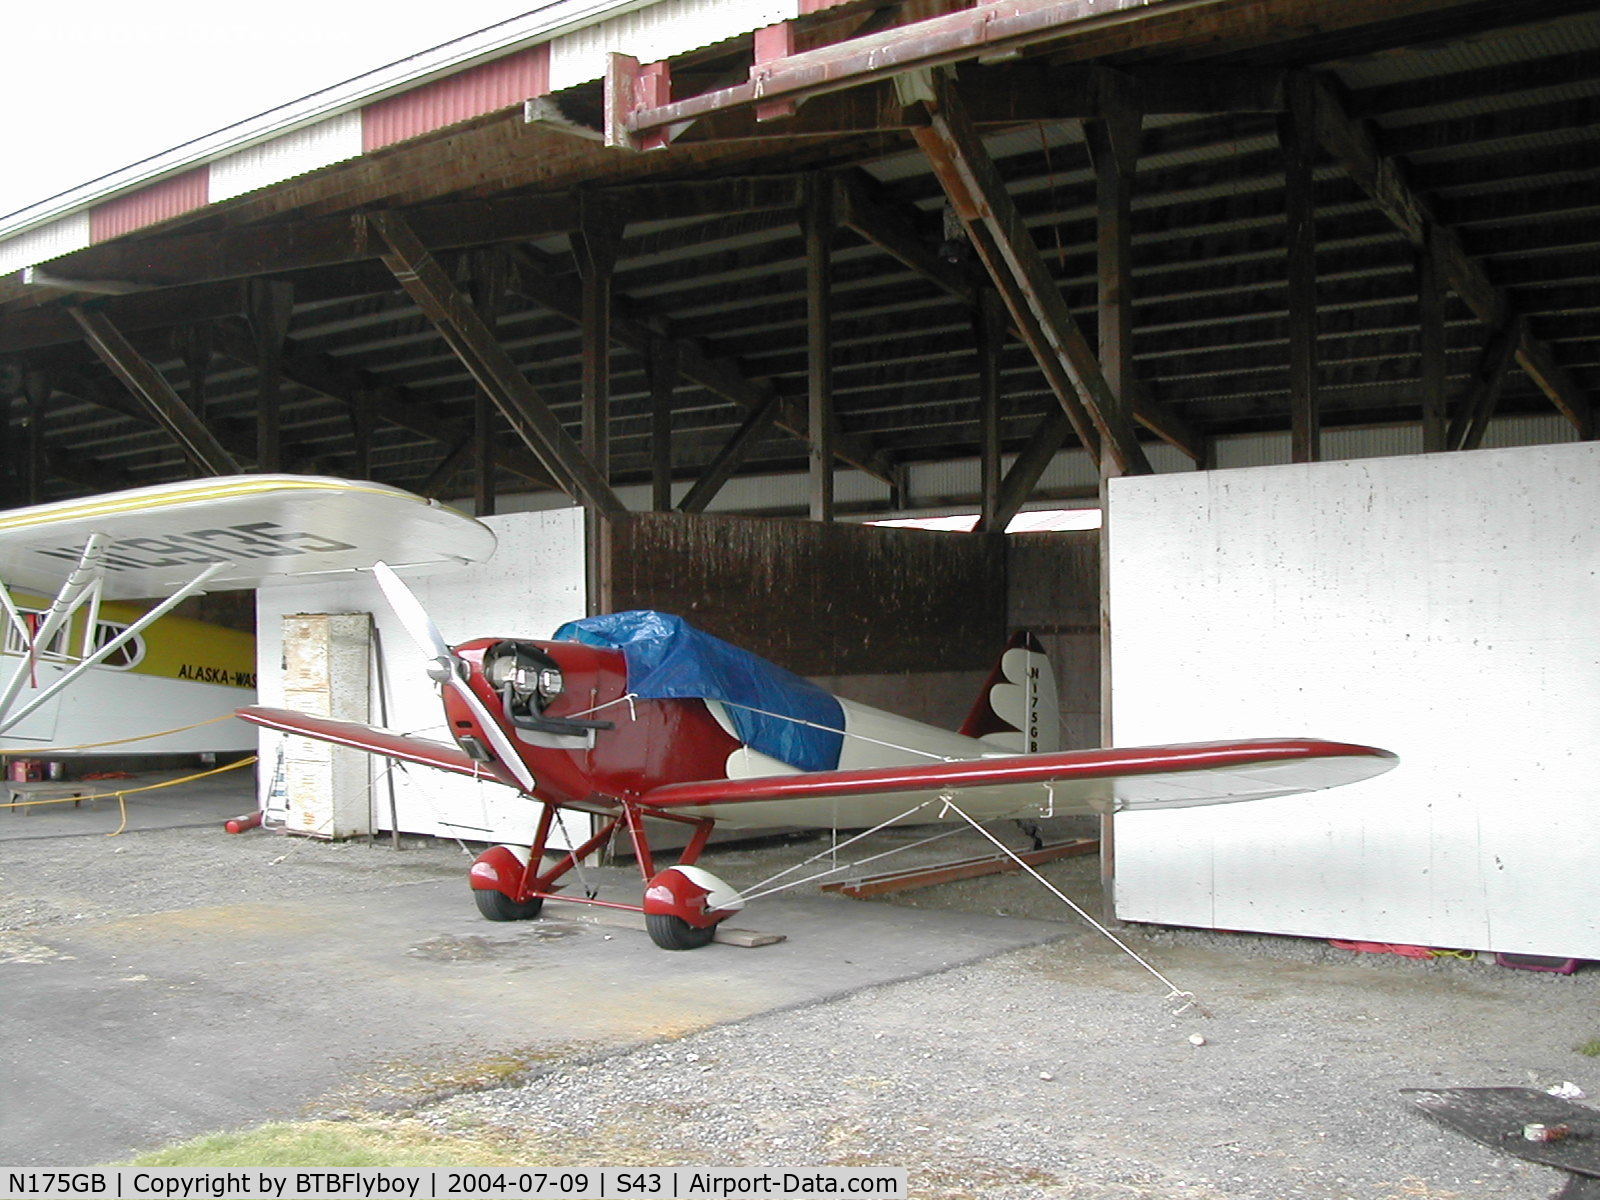 N175GB, 2003 Bowers Fly Baby C/N 01 (N175GB), Under cover in a T-hangar at Harvey Field